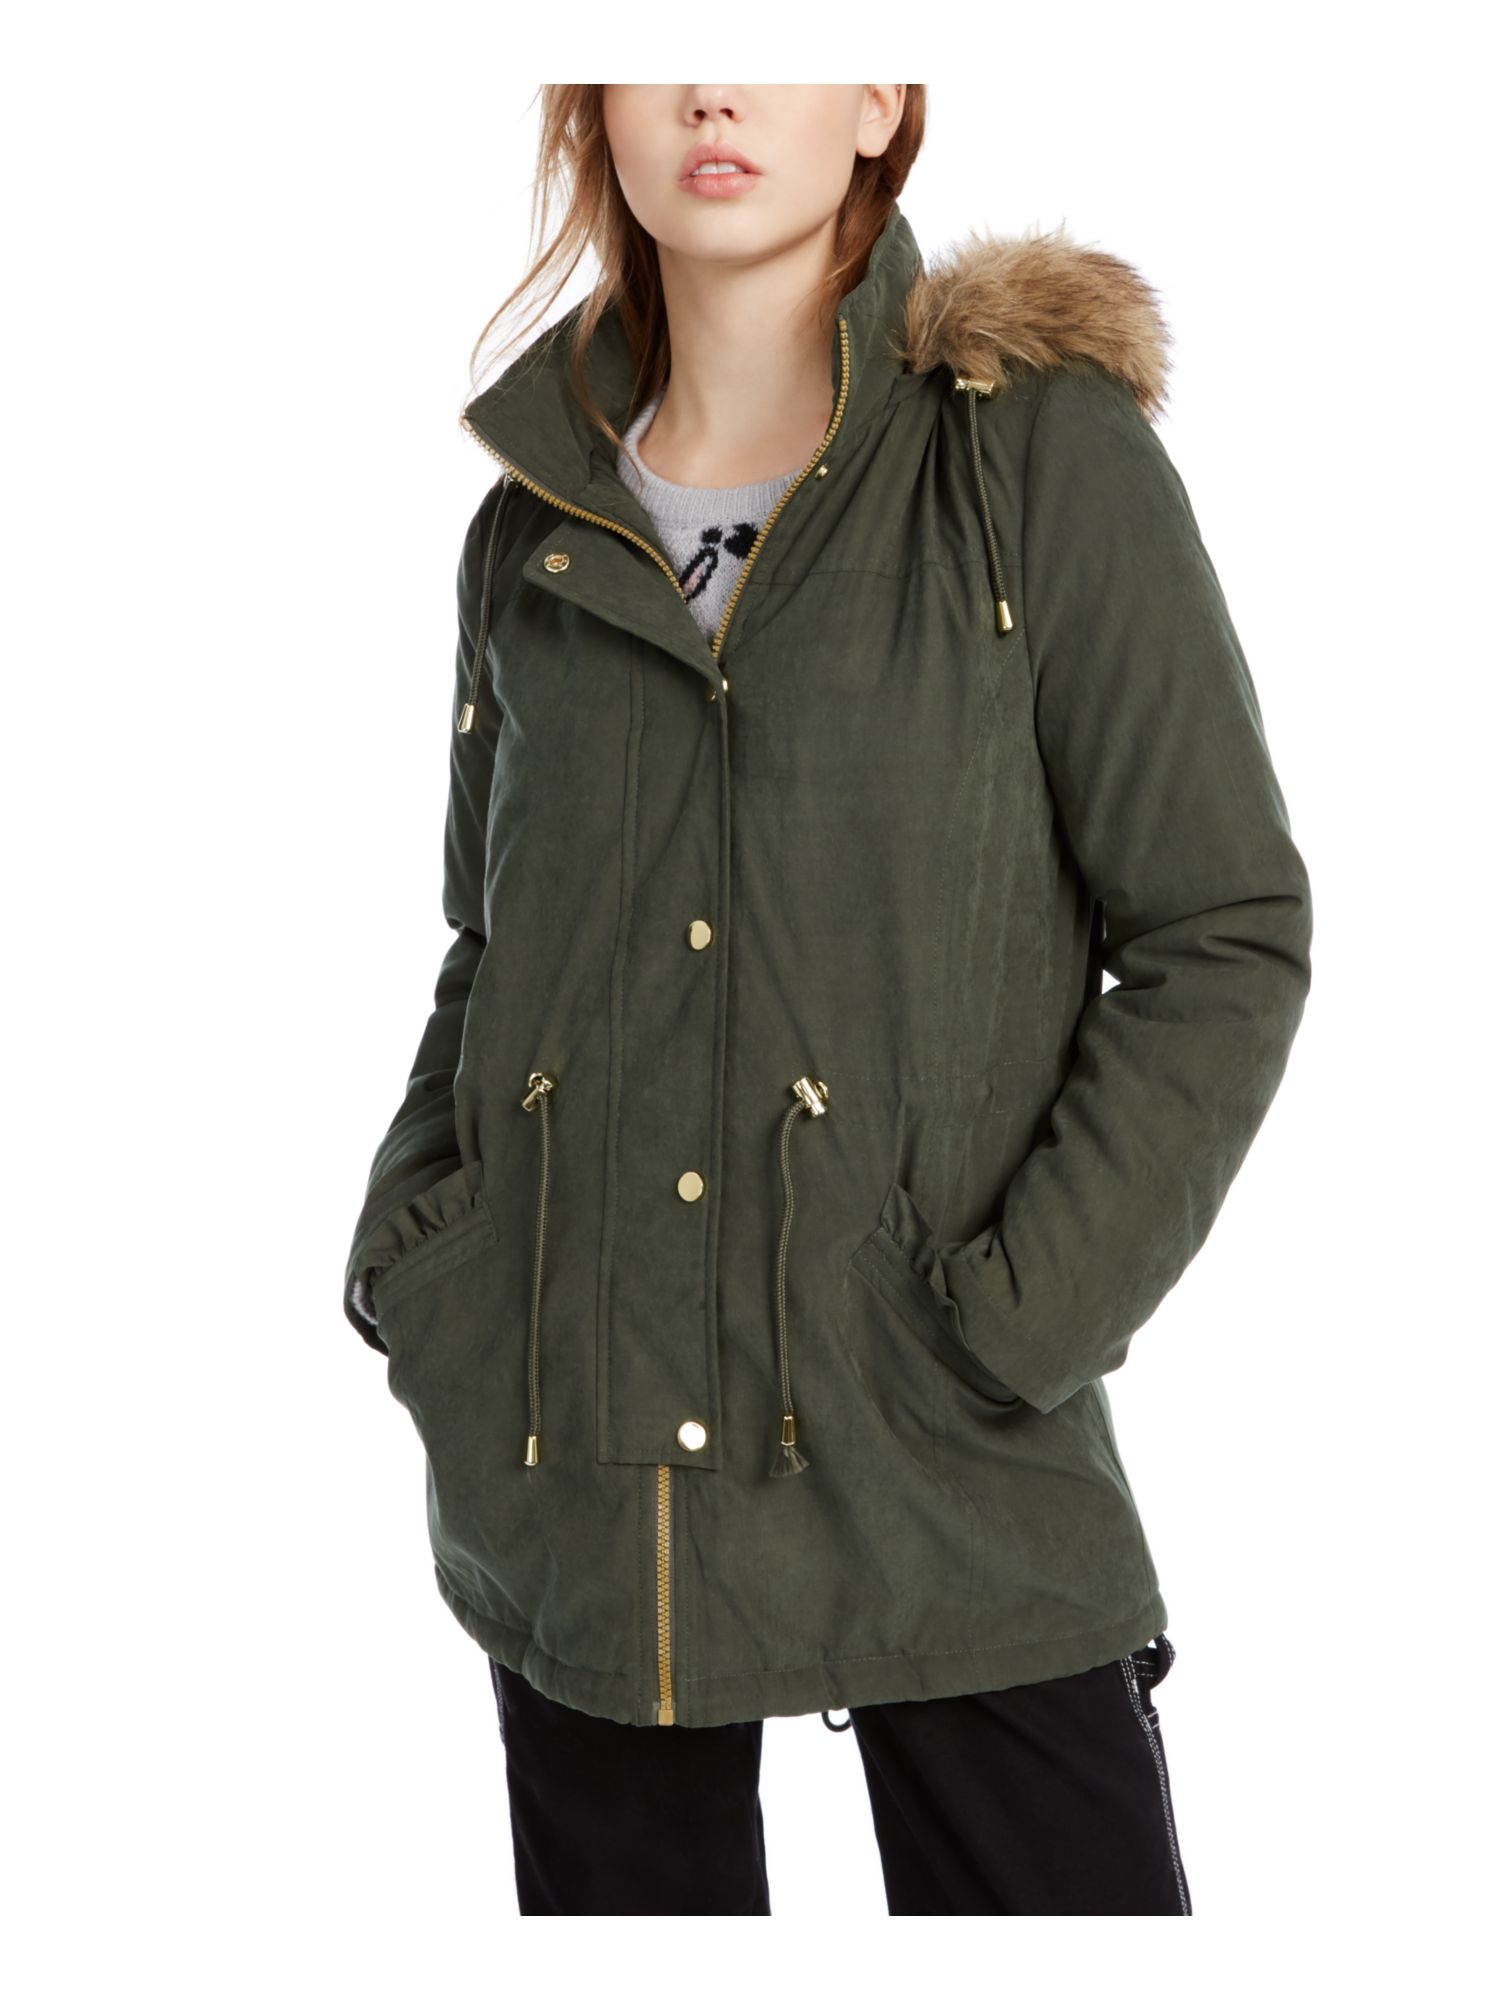 CELEBRITY PINK Womens Green Faux Fur Hood Parka Winter Jacket Coat Juniors M - image 1 of 4